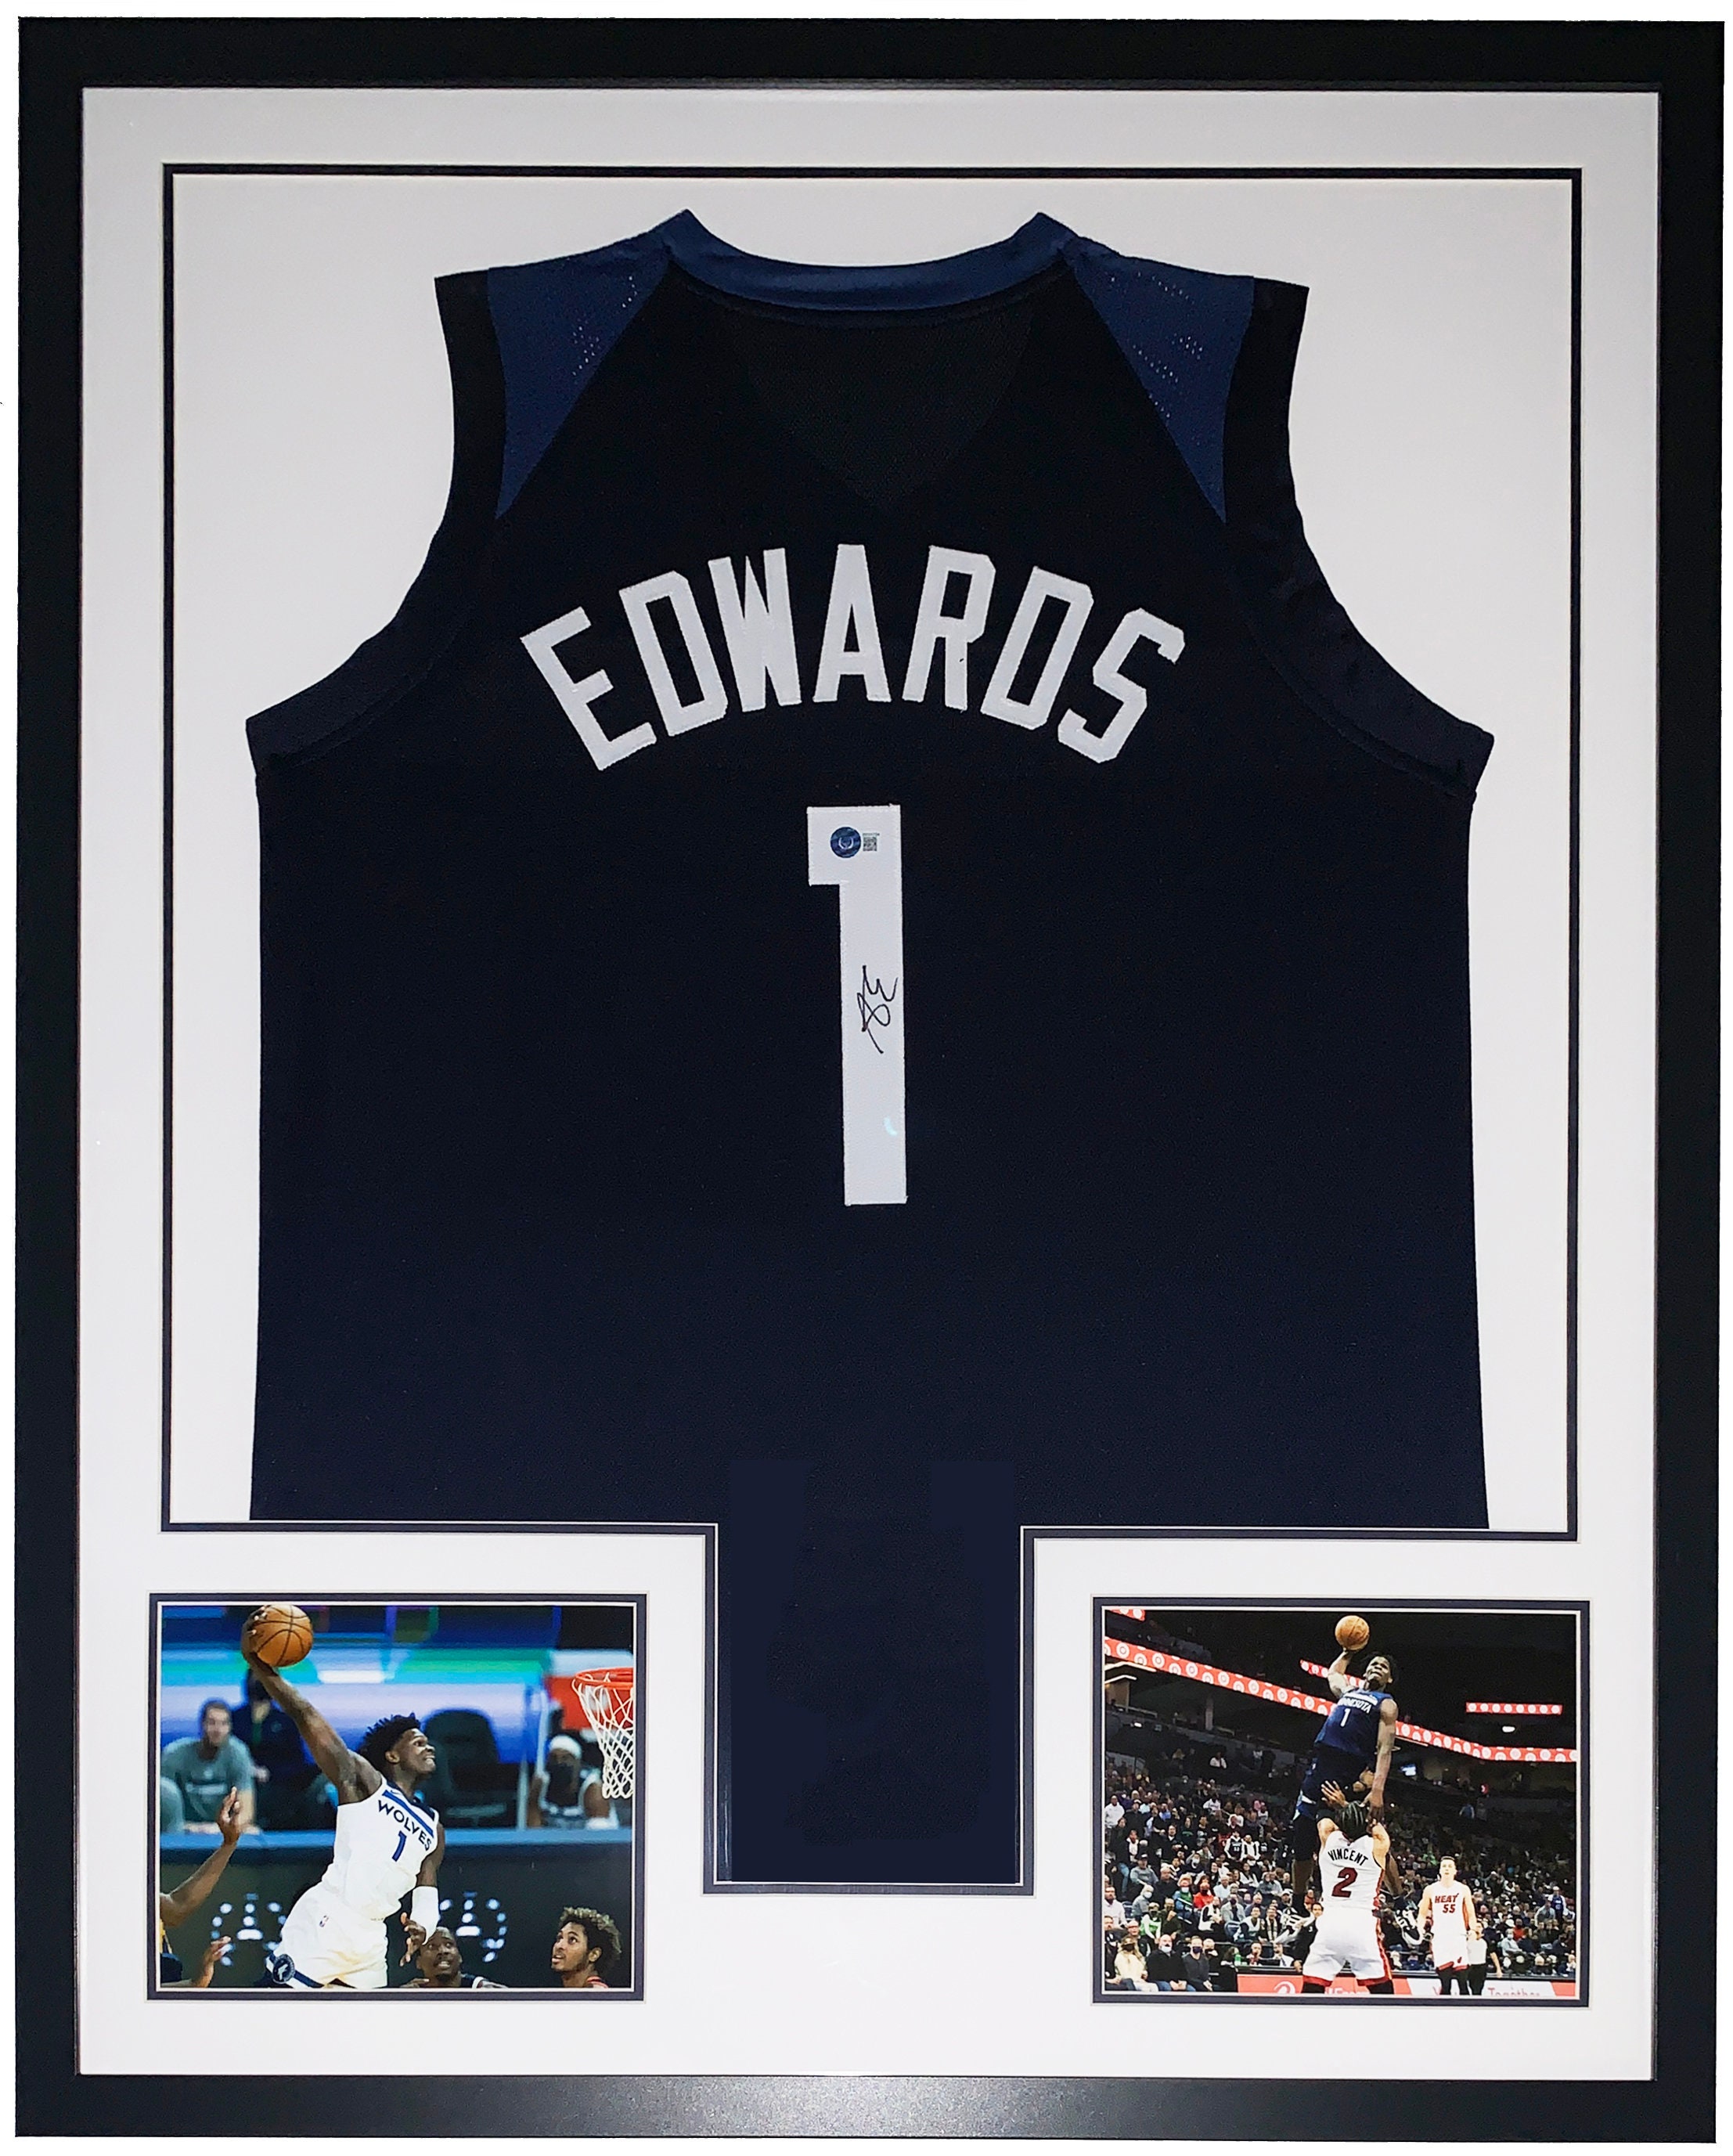 Anthony Edwards Autographed Minnesota Custom Green Basketball Jersey - BAS